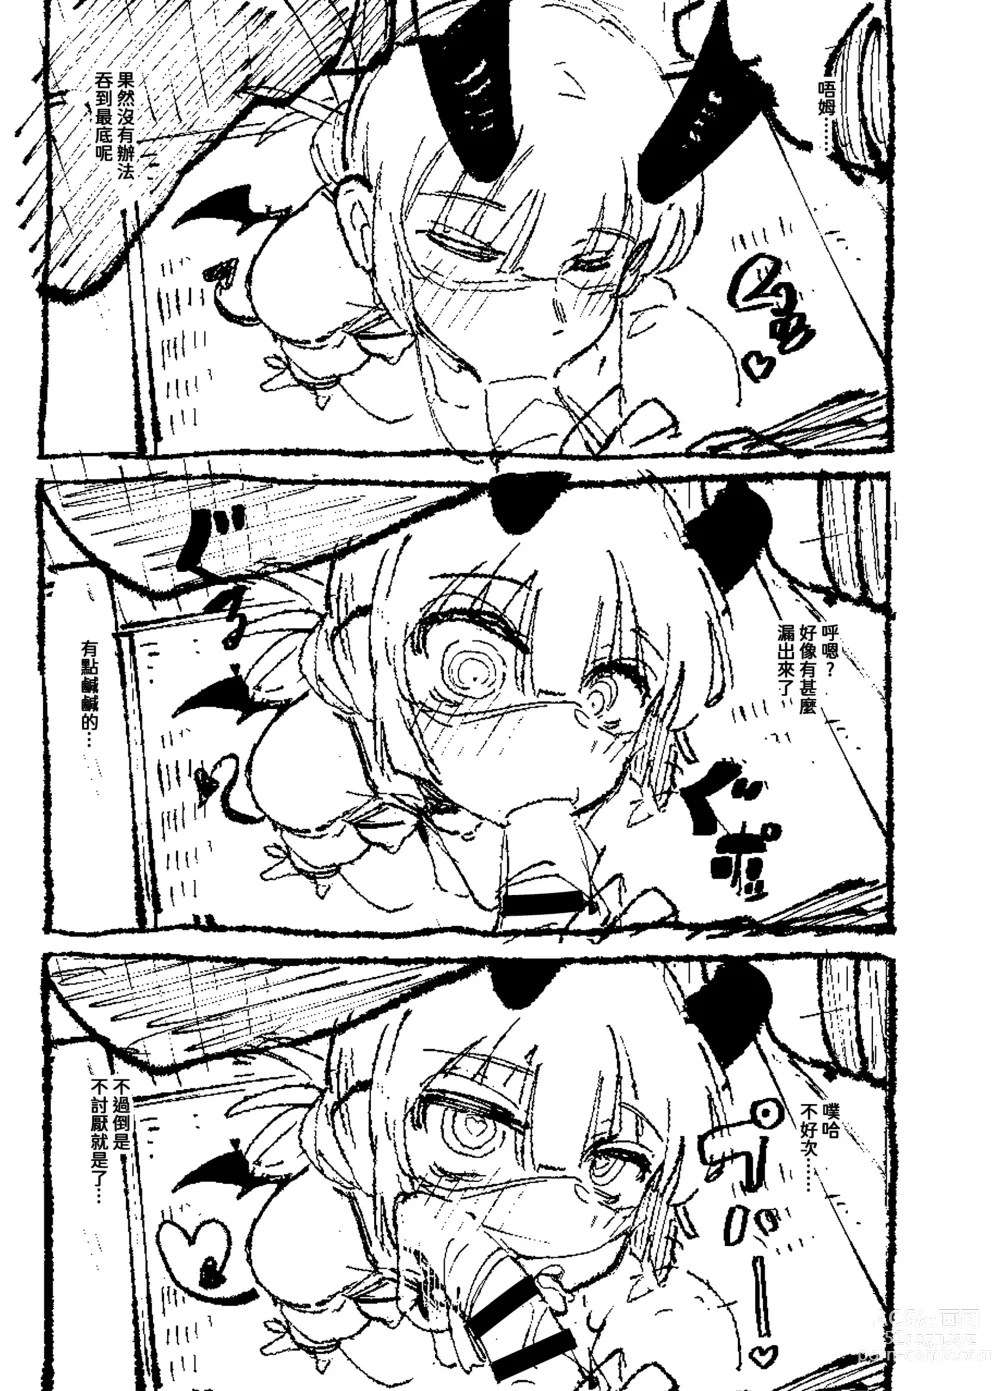 Page 32 of doujinshi 家裡過於潮濕長出致幻蘑菇意外誤食後發情的那些事